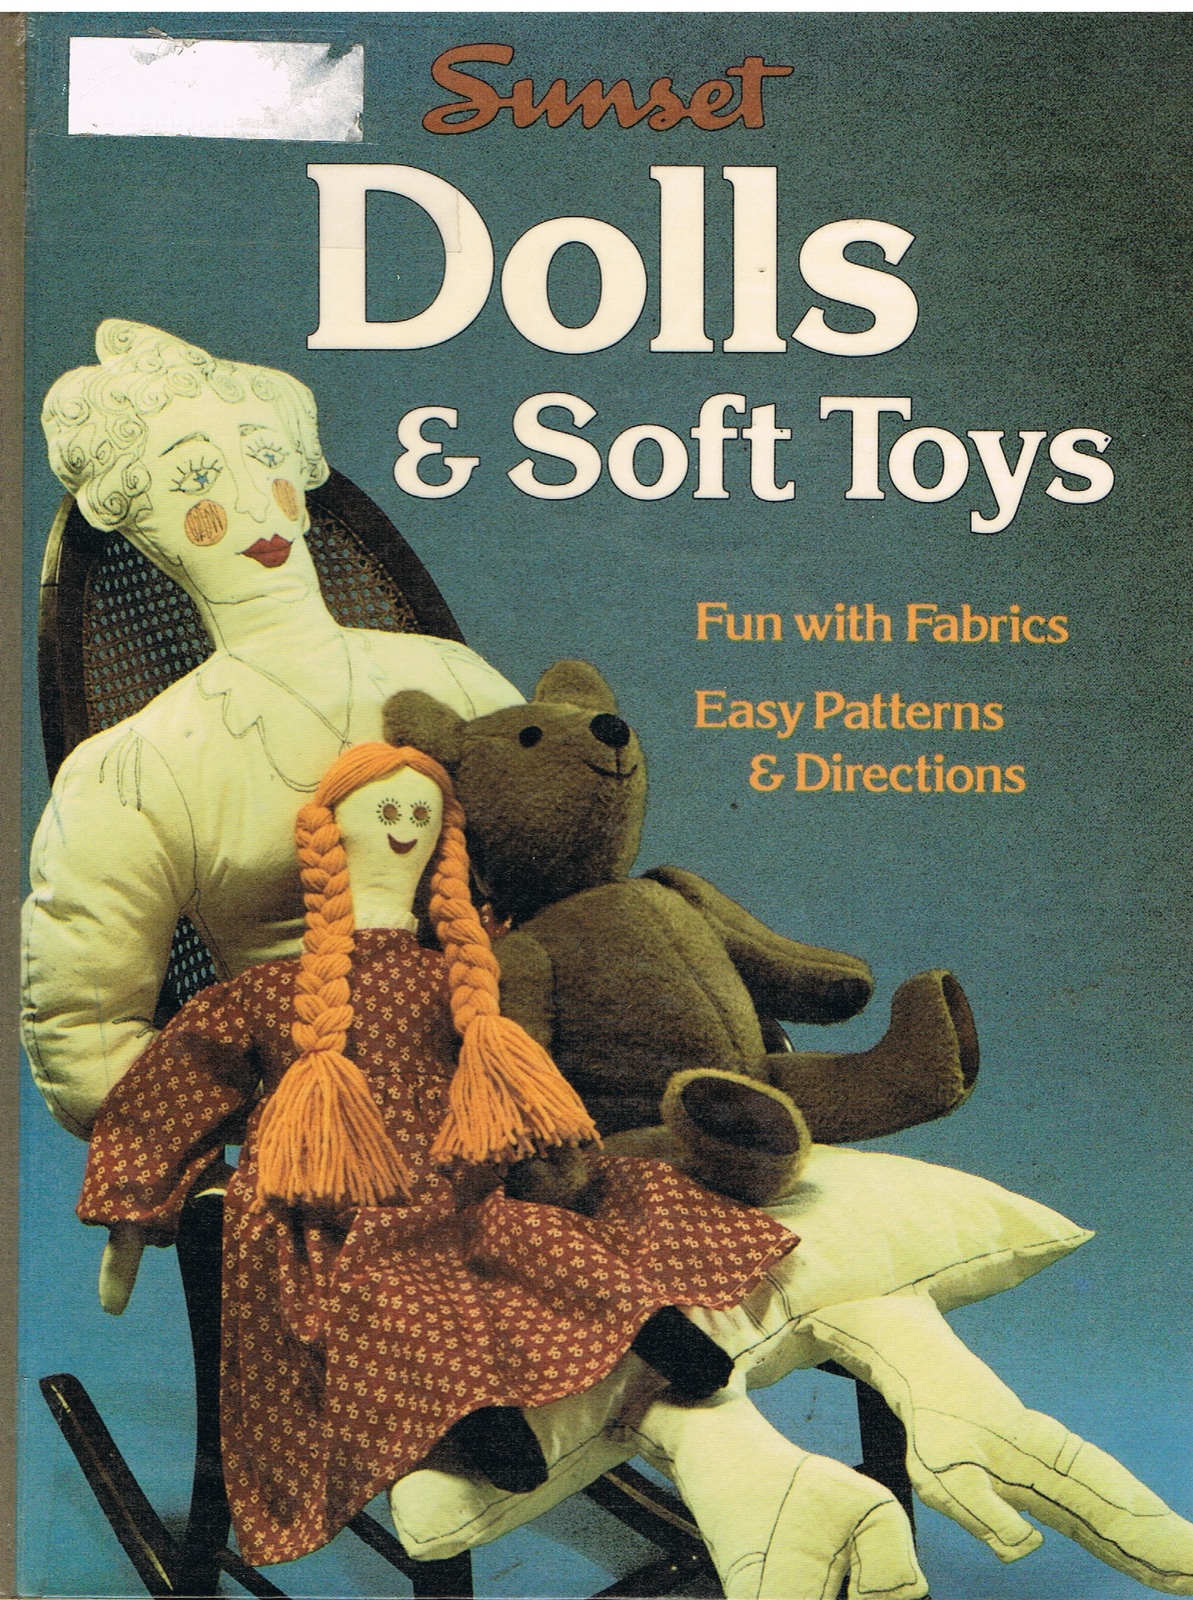 Sunset Dolls & Soft Toys Crafting Book - $7.99